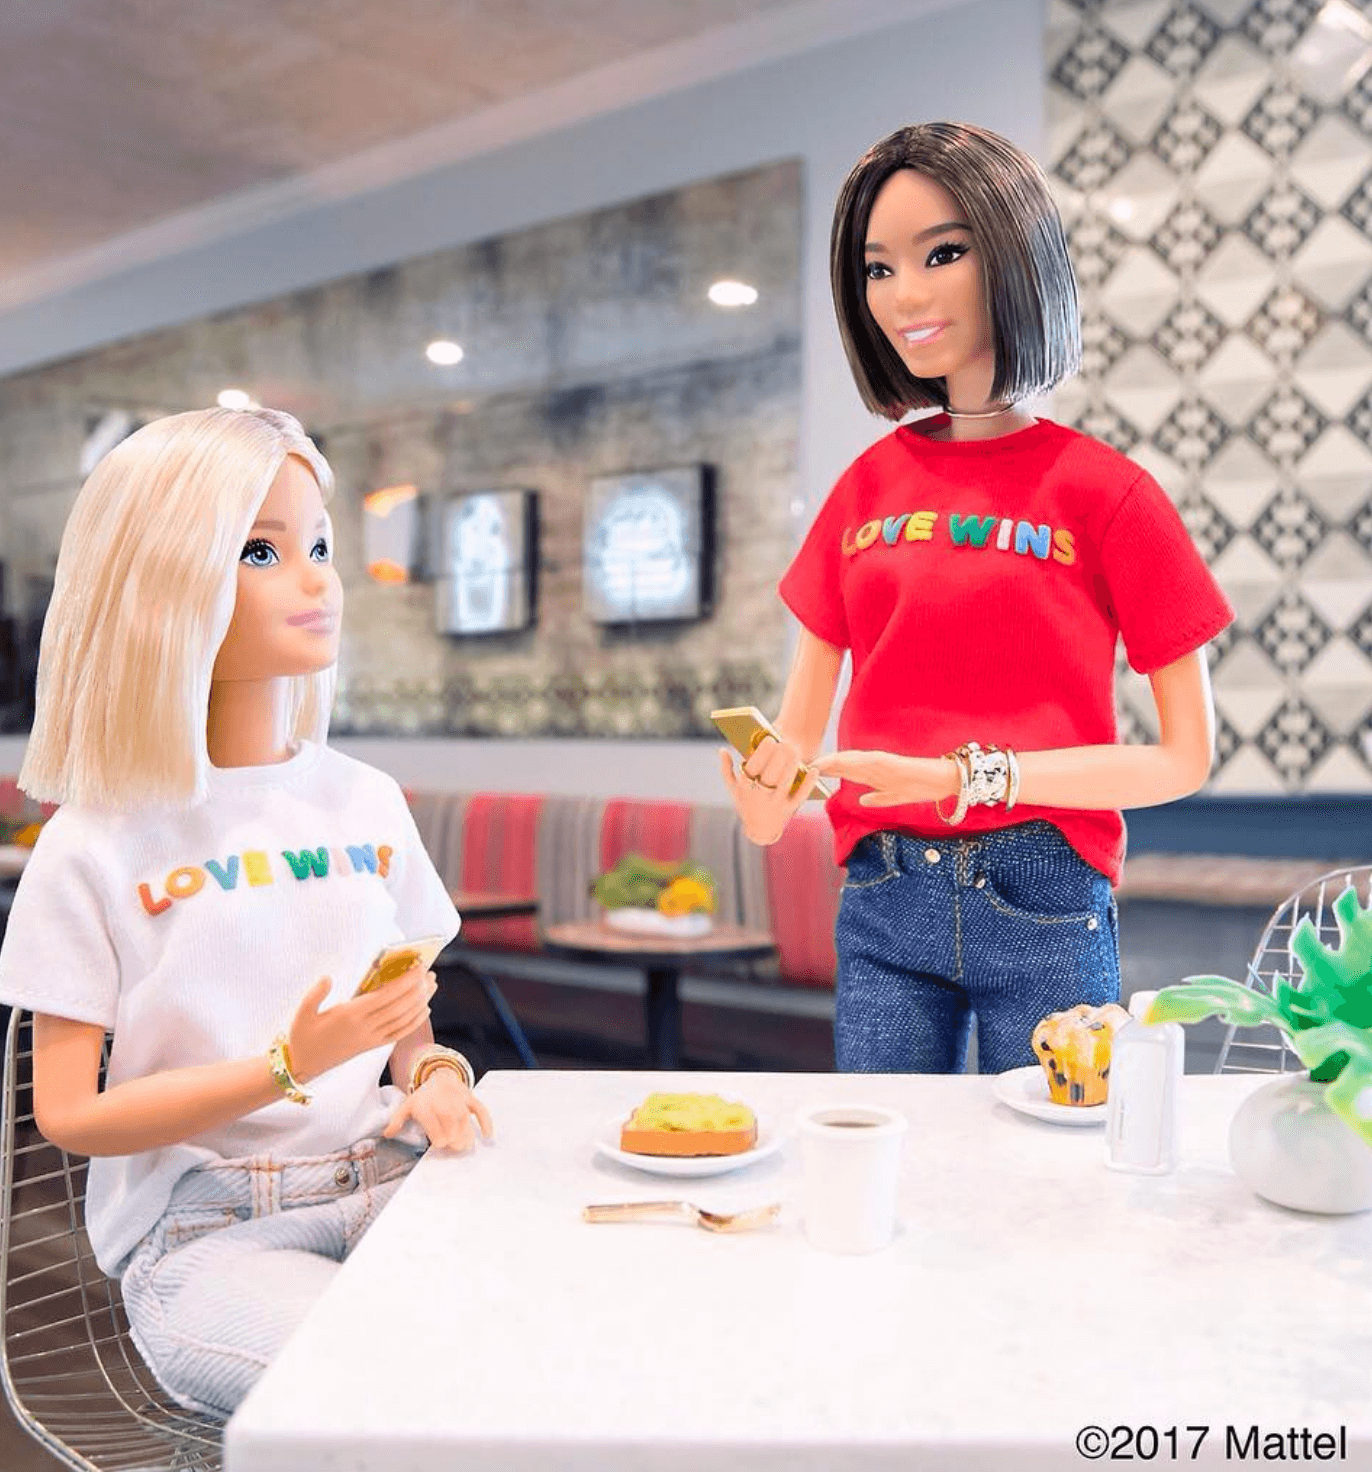 Barbie a sostegno dei matrimoni gay: "L'amore vince" - barbie 2 - Gay.it